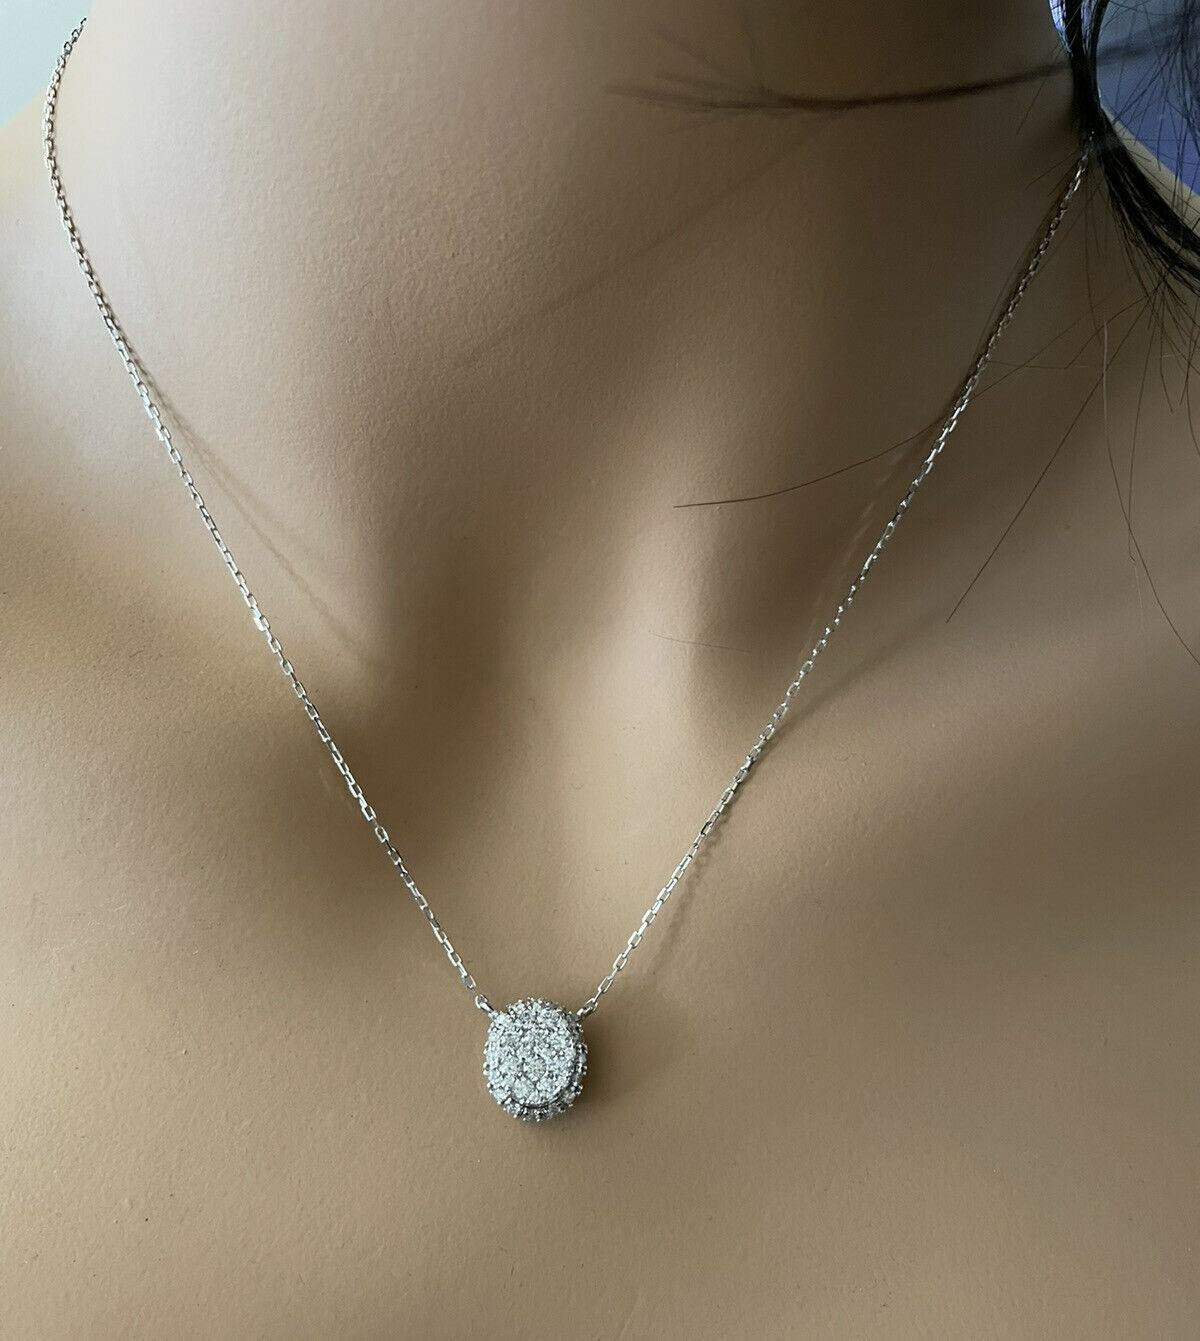 0.95 Carat Stunning 14 Karat Solid White Gold Diamond Chain Necklace For Sale 1